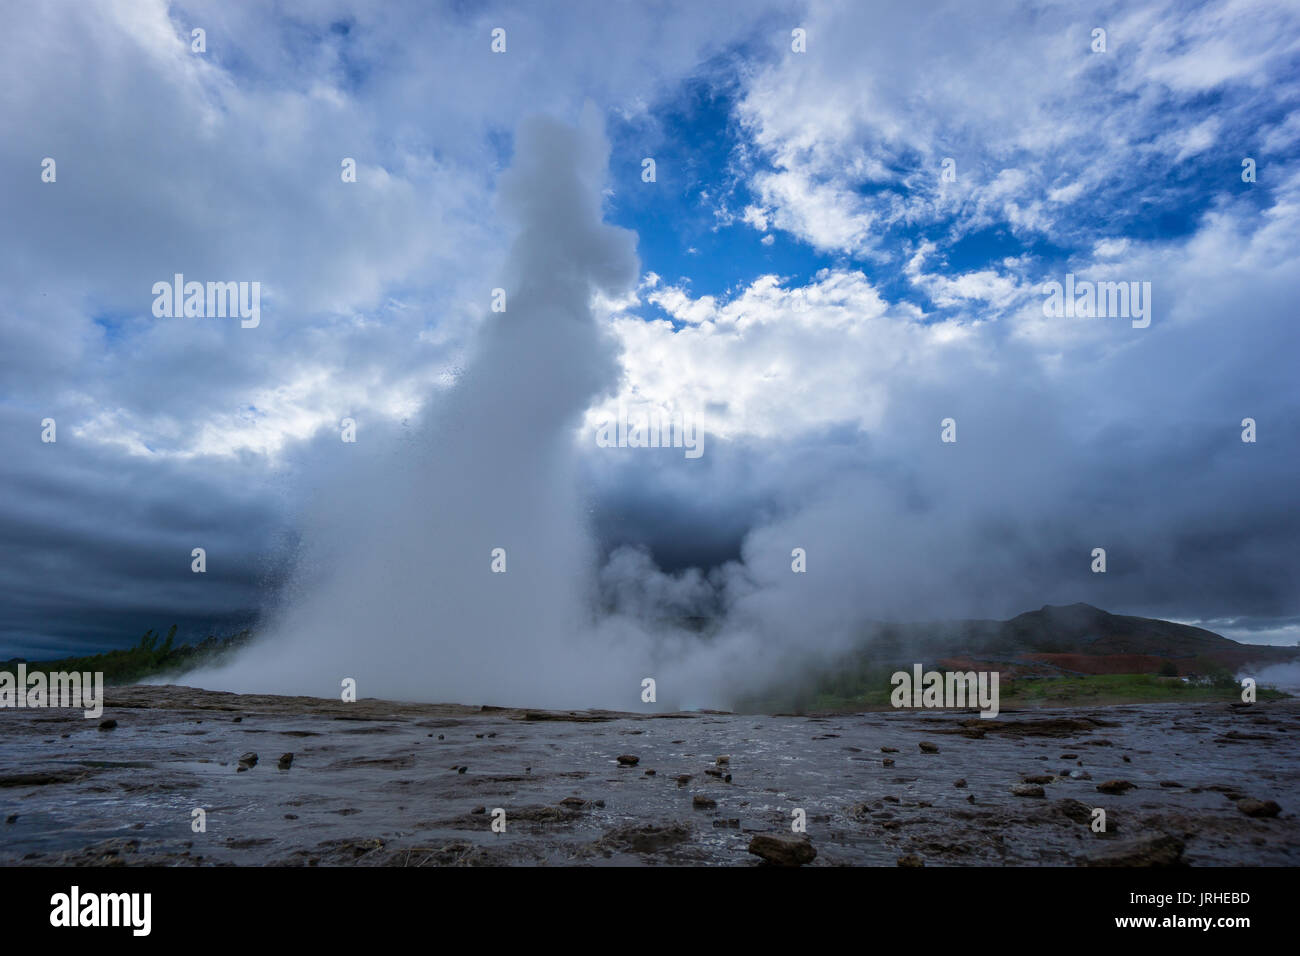 Iceland - Strong eruption at Geyser Strokkur Stock Photo